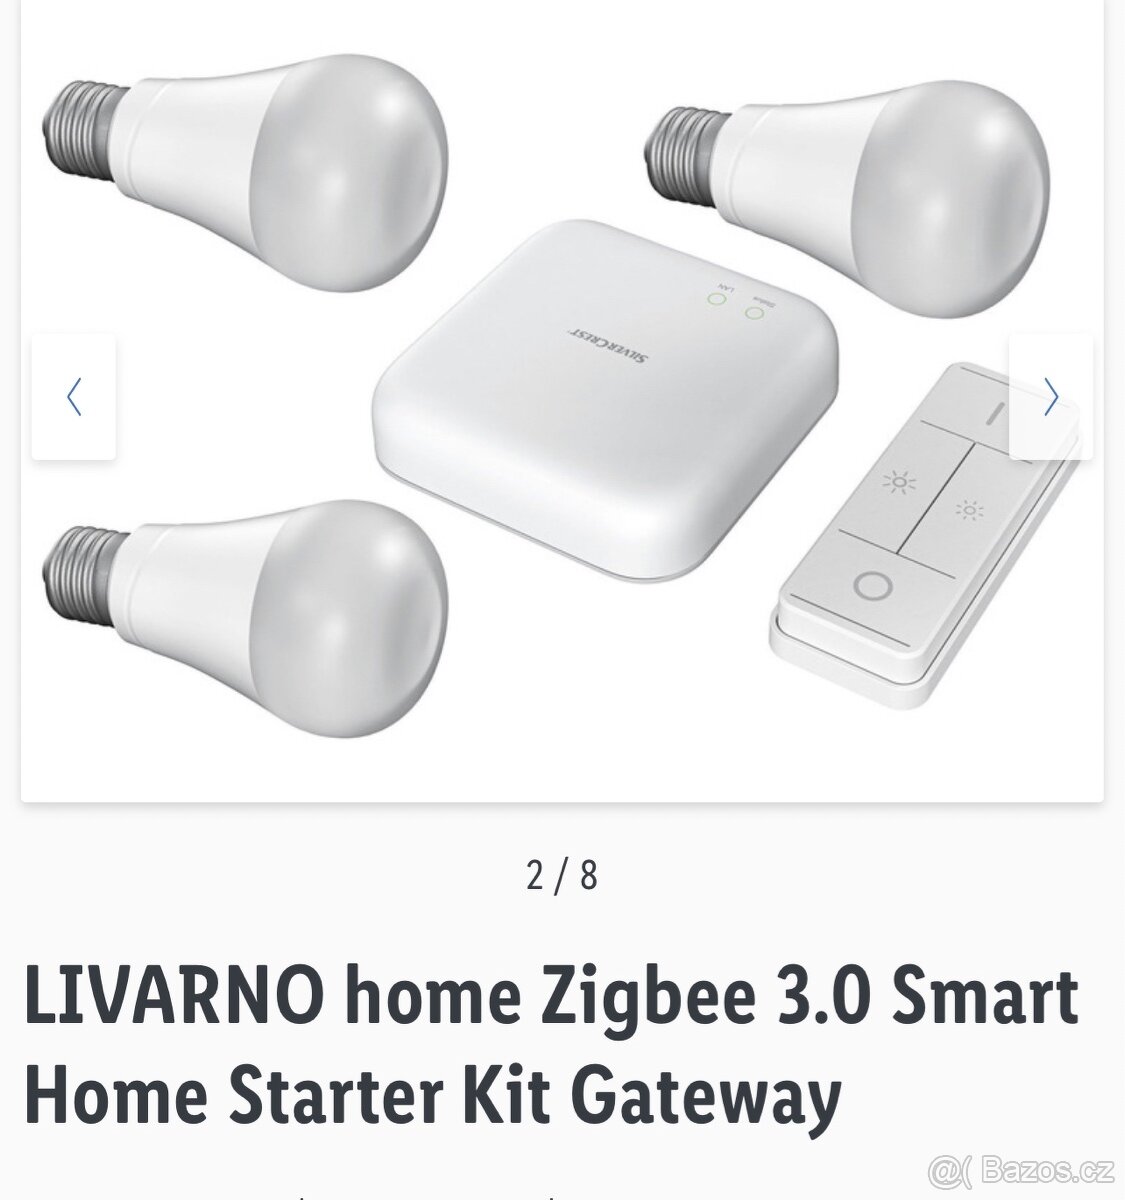 Nový LIVARNO home Zigbee 3.0 Smart Home Starter Kit Gateway